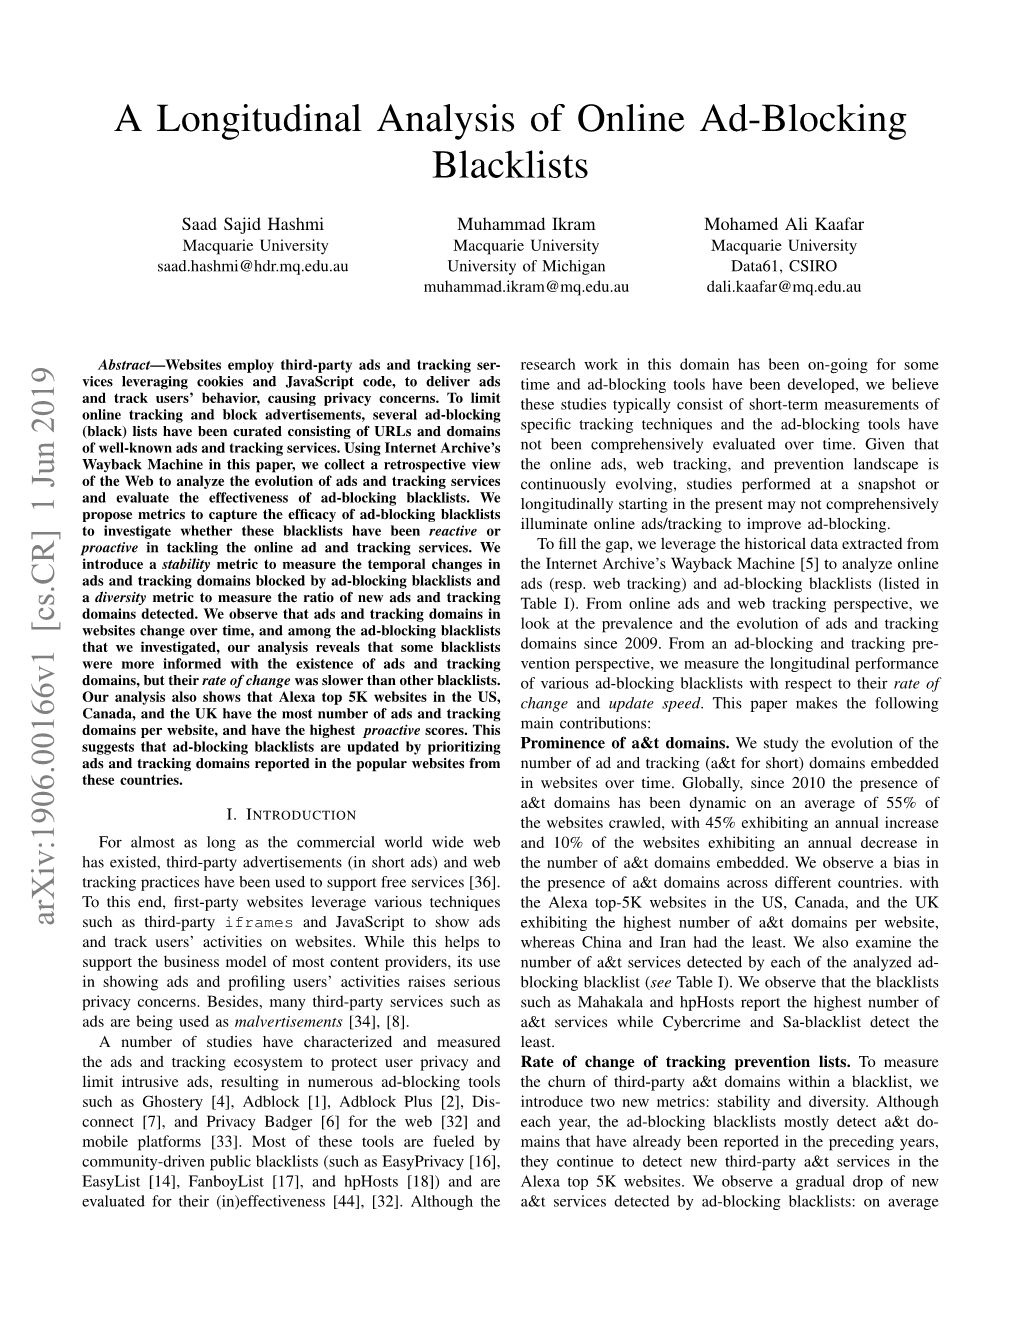 A Longitudinal Analysis of Online Ad-Blocking Blacklists